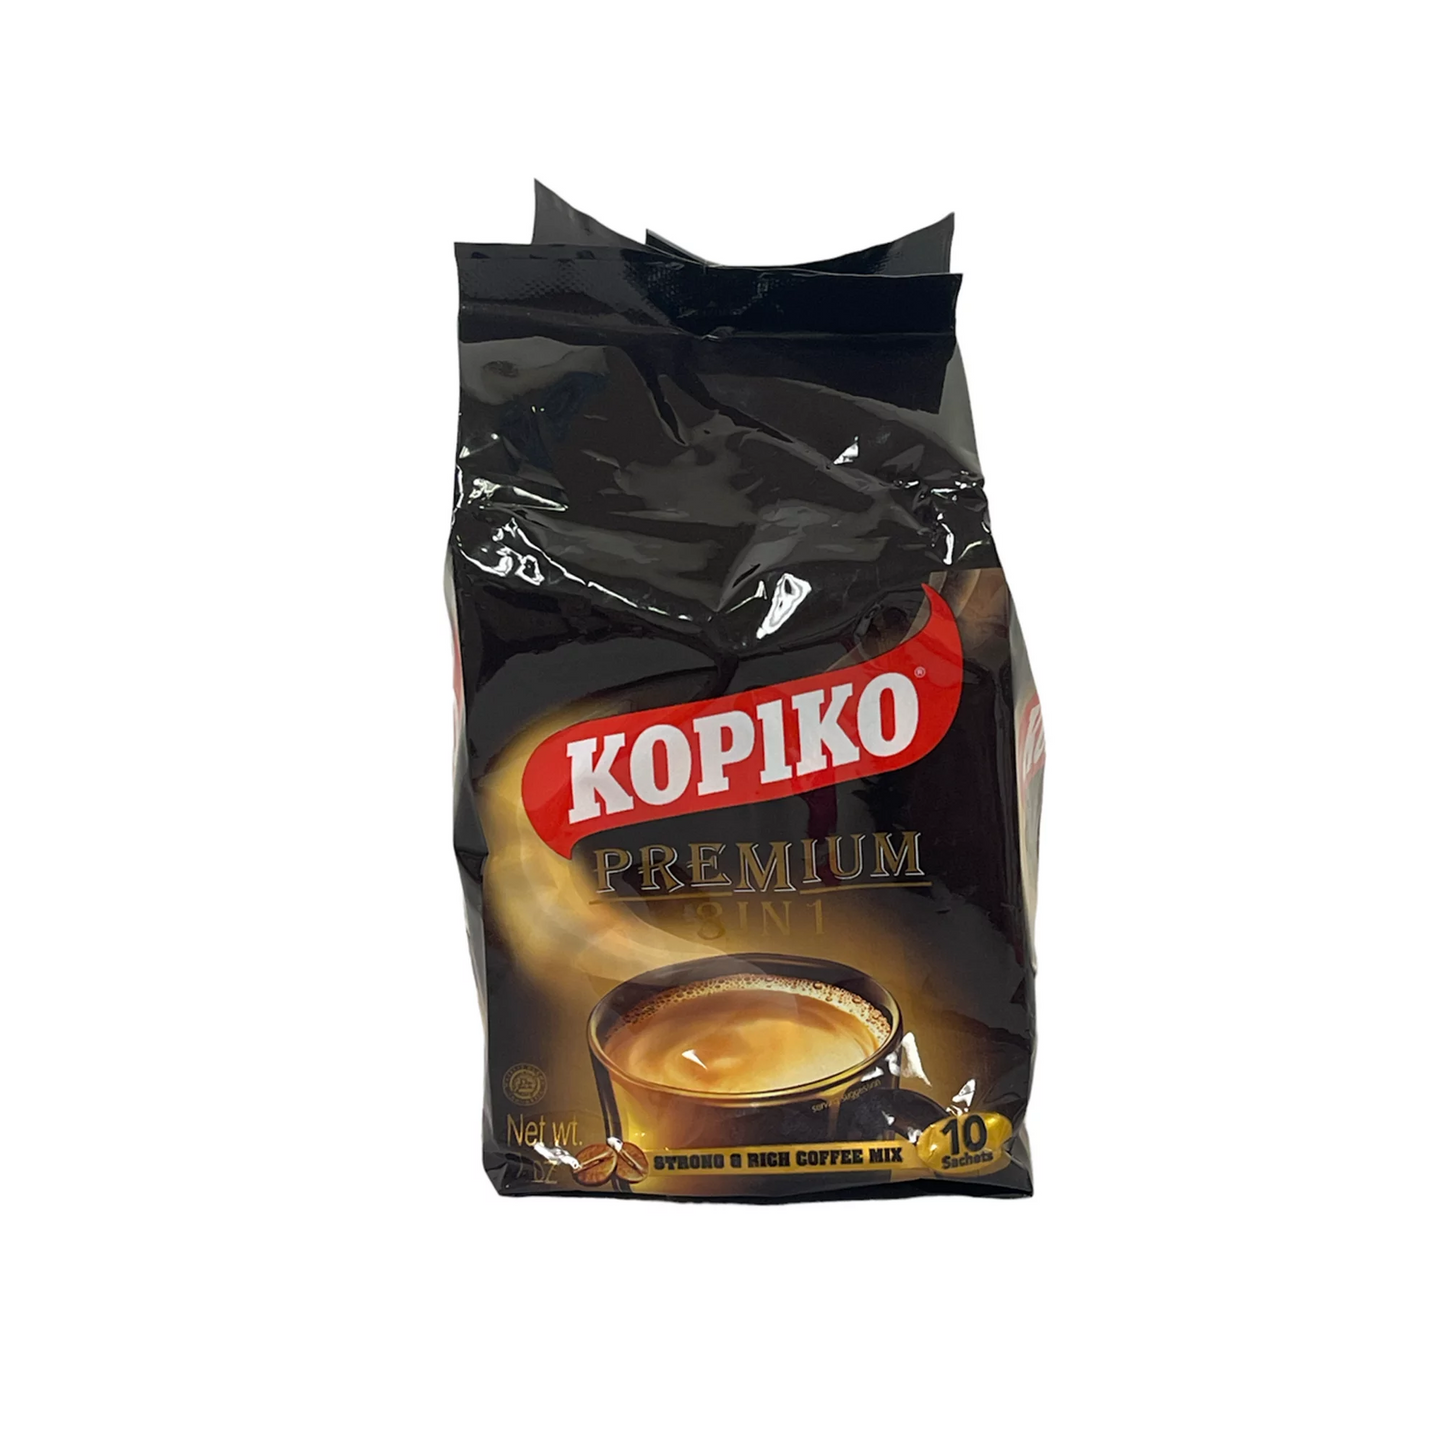 KOPIKO 3-IN-1 PREMIUM COFFEE 10 SACHETS